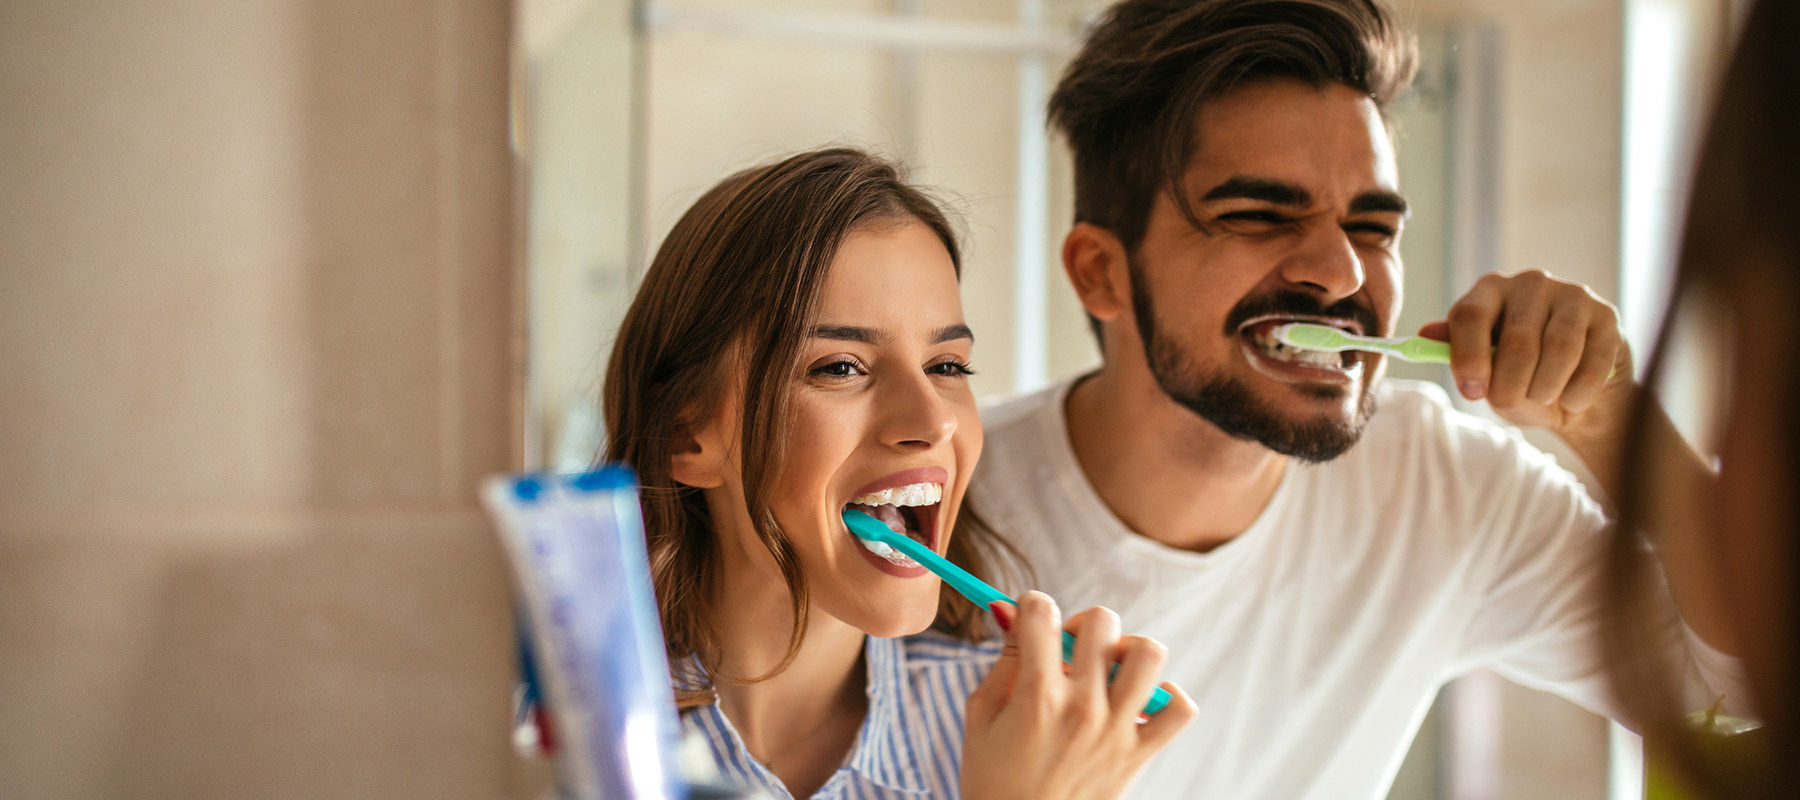 Smiling couple brushing their teeth